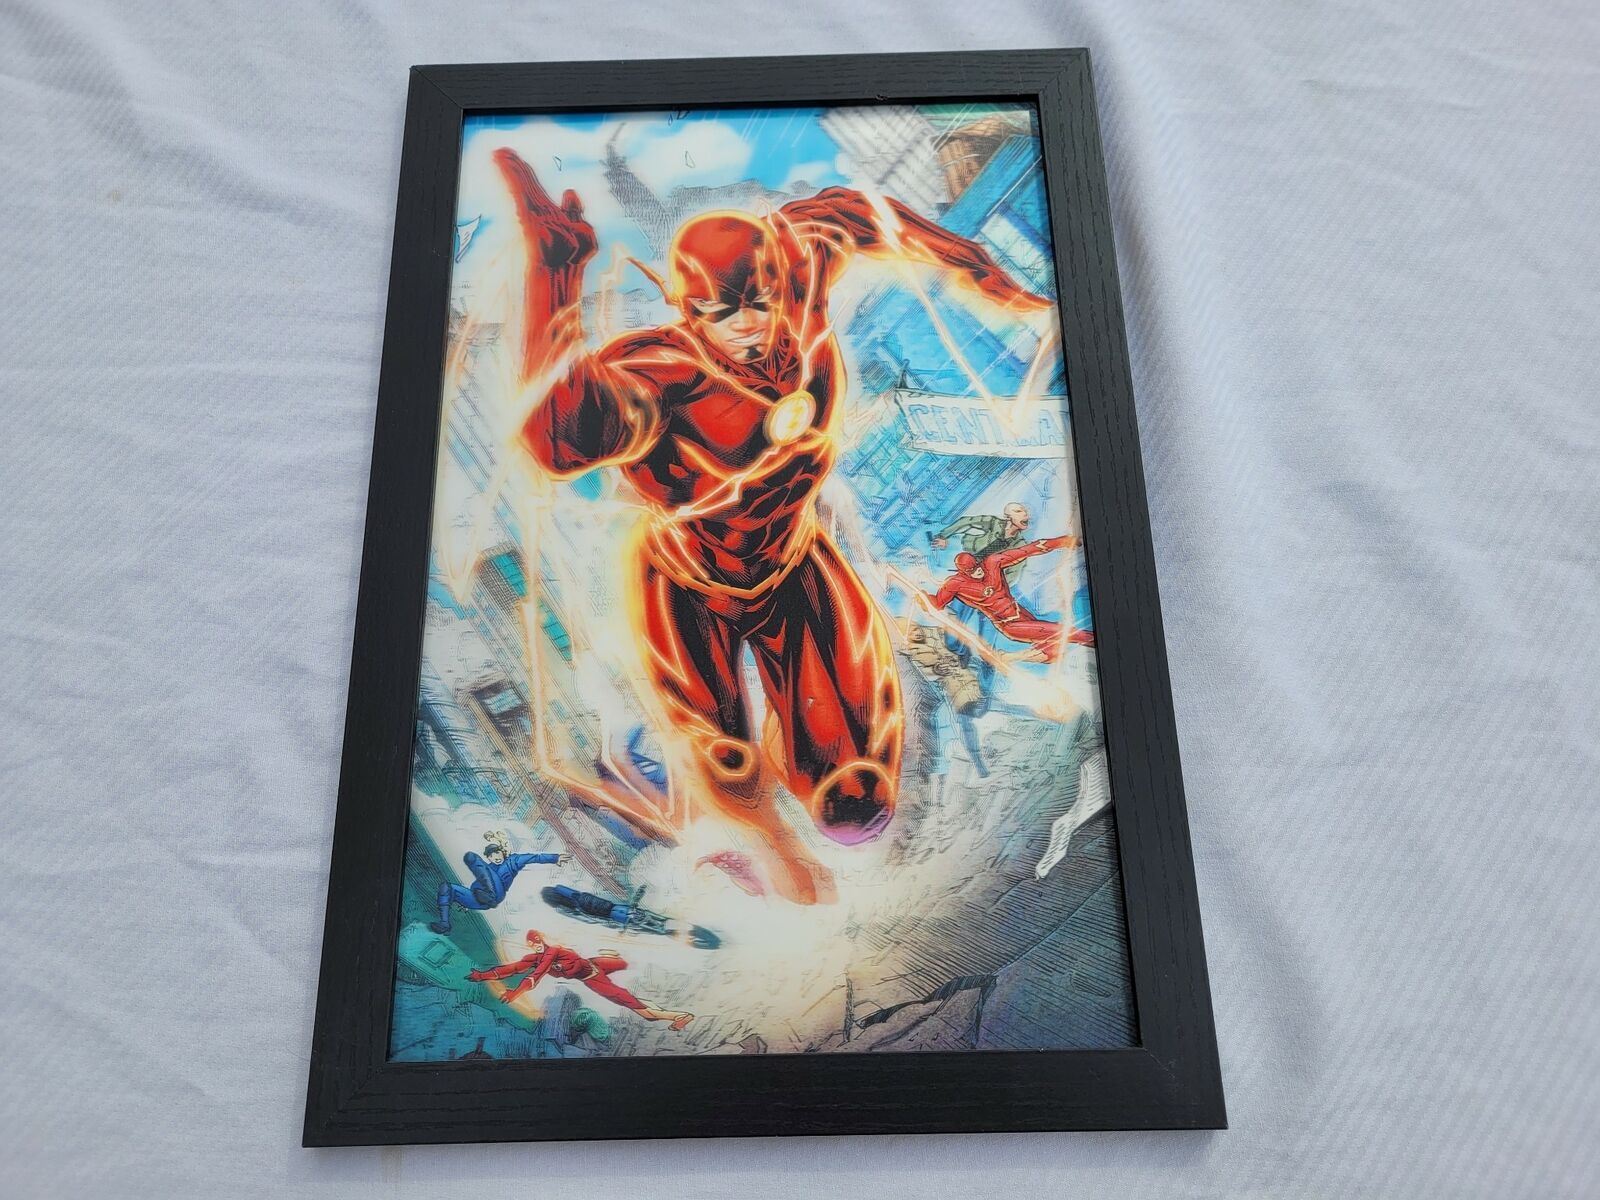 Artwork Hologram The Flash 3D 13 X 19 Framed Picture DC Comics Decor